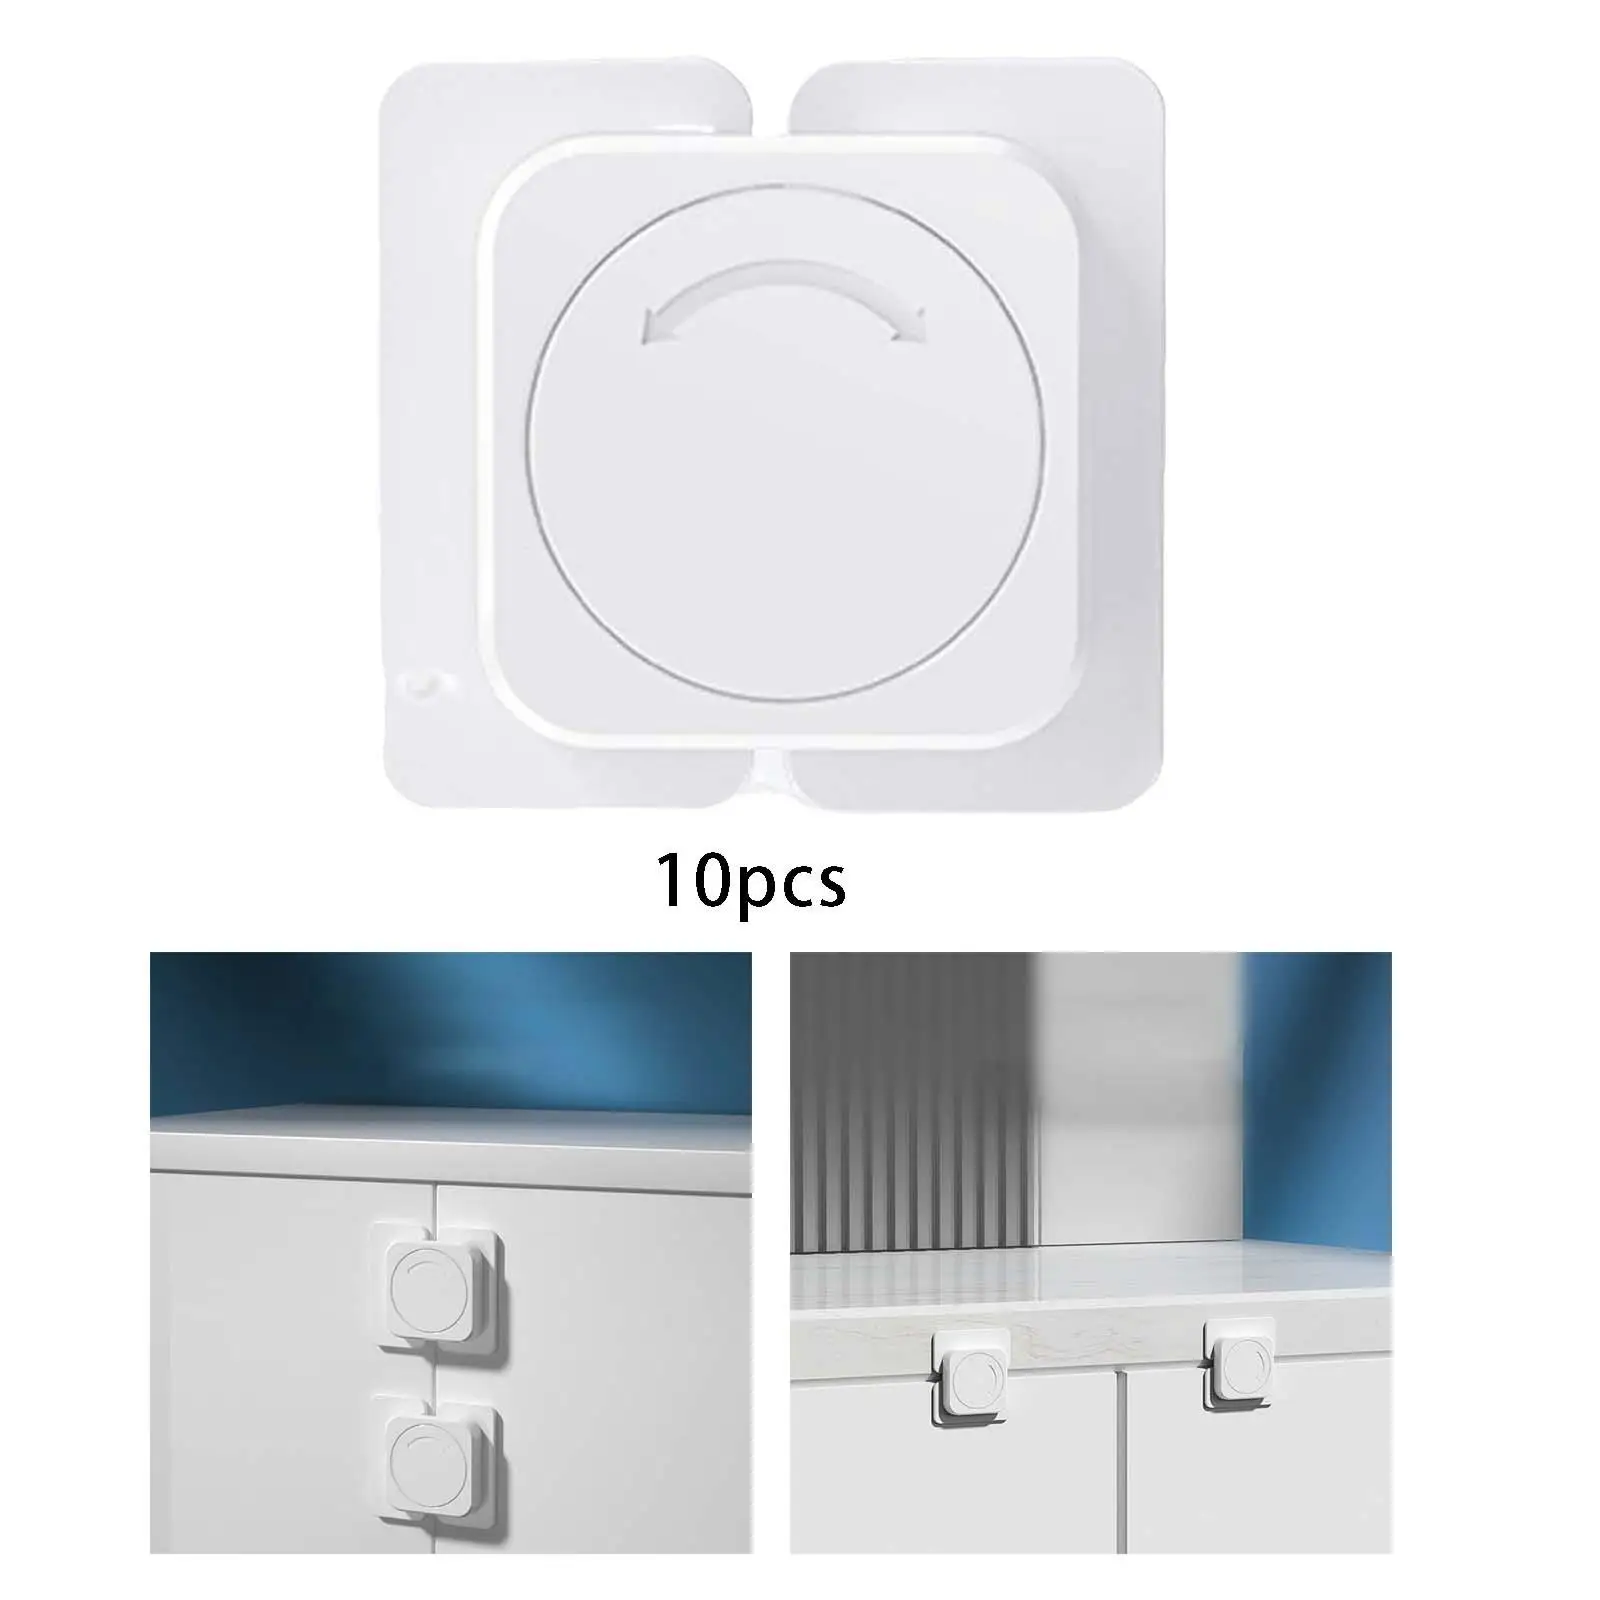 10Pcs Reusable Doors Locks Safety Rotary Locks for Cupboard Cabinet Freezer